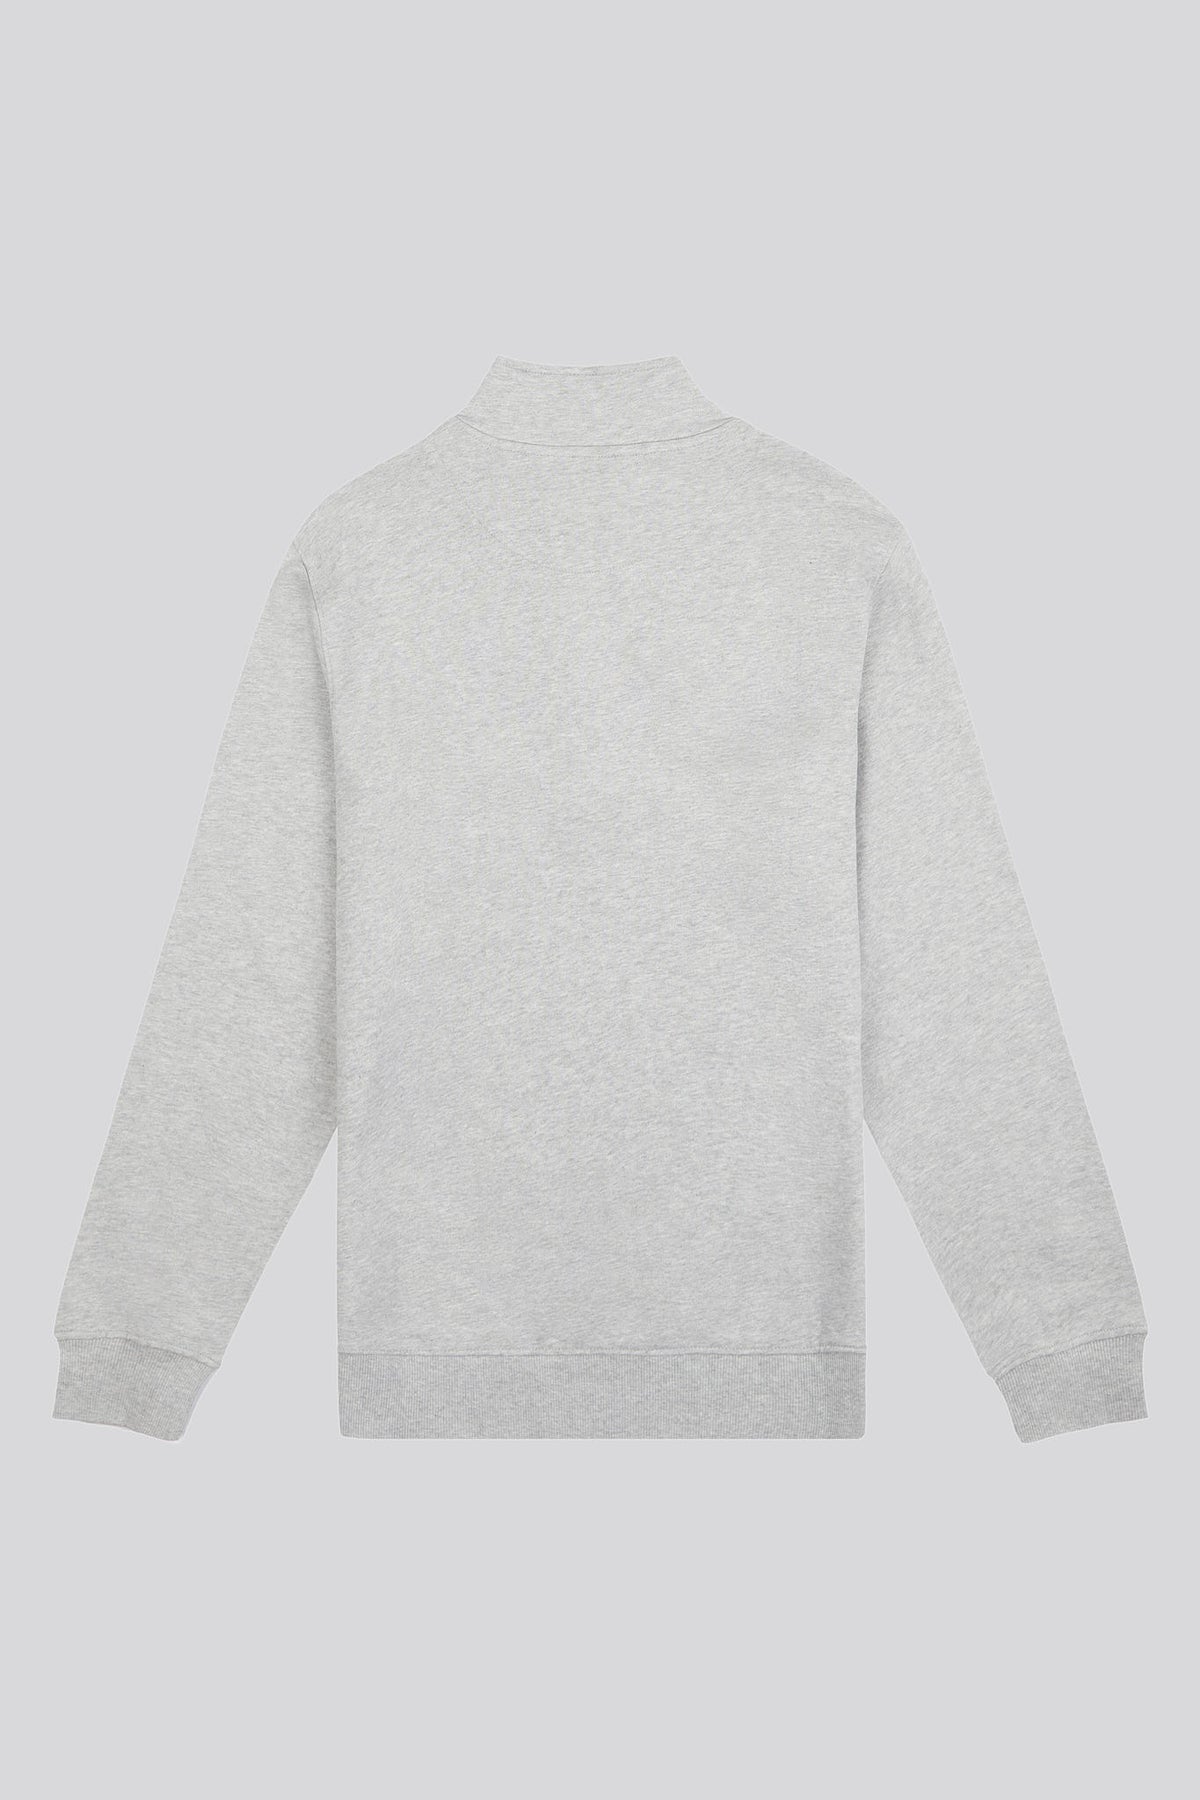 Mens Classic Fit 1/4 Zip Sweatshirt in Mid Grey Marl